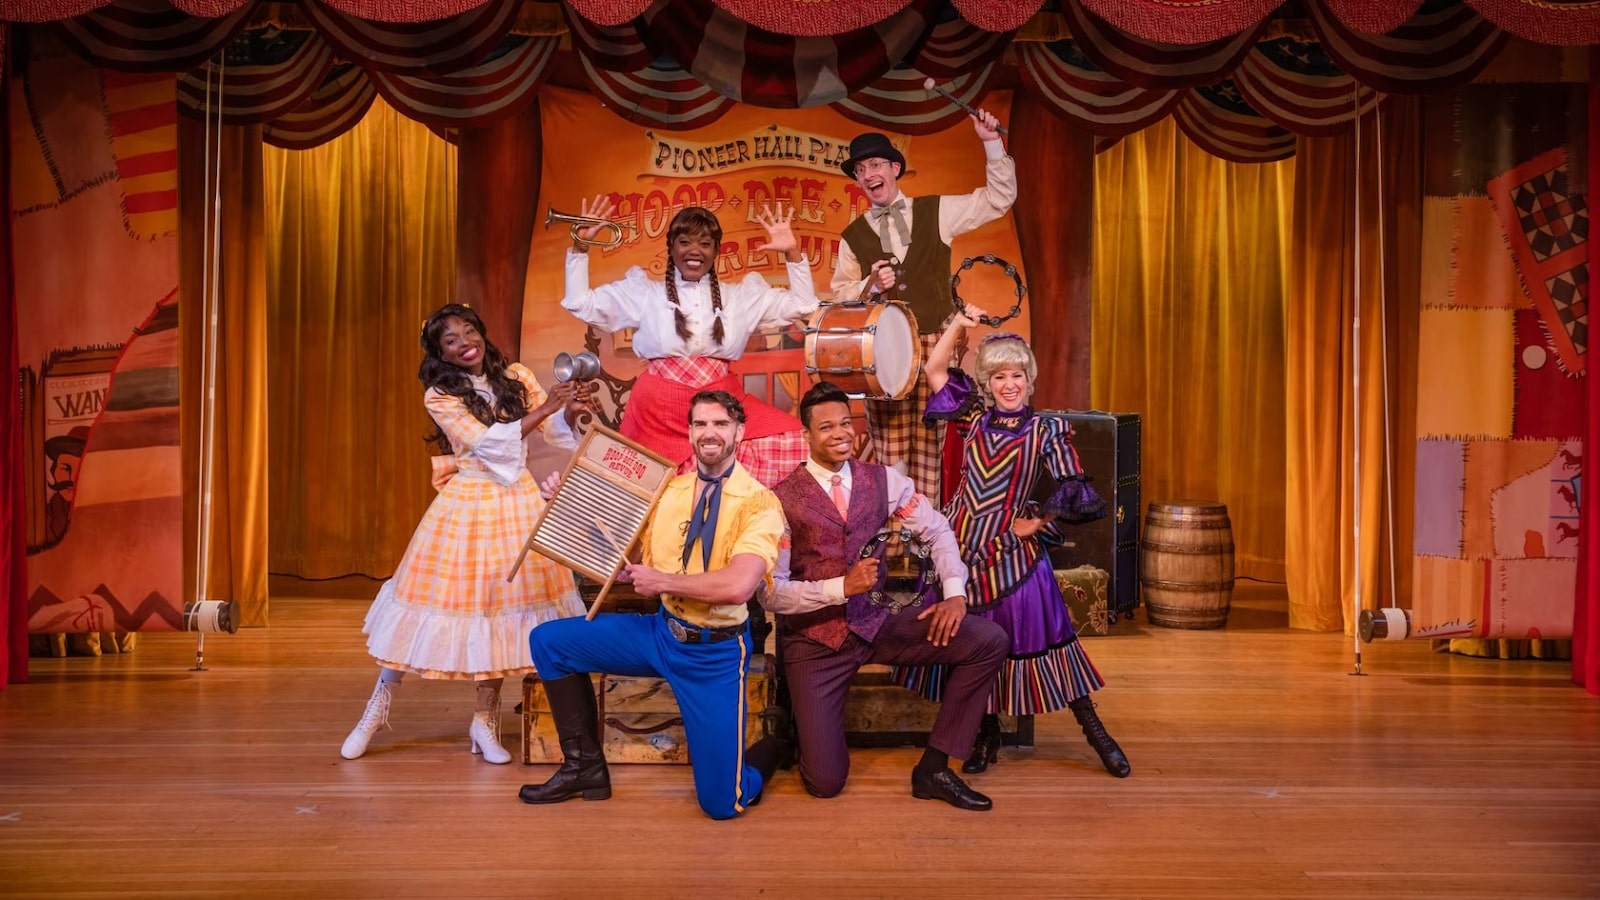 Fifty Years of Hoop-Dee-Doo: A History of Disney’s Hoop-Dee-Doo Musical Revue